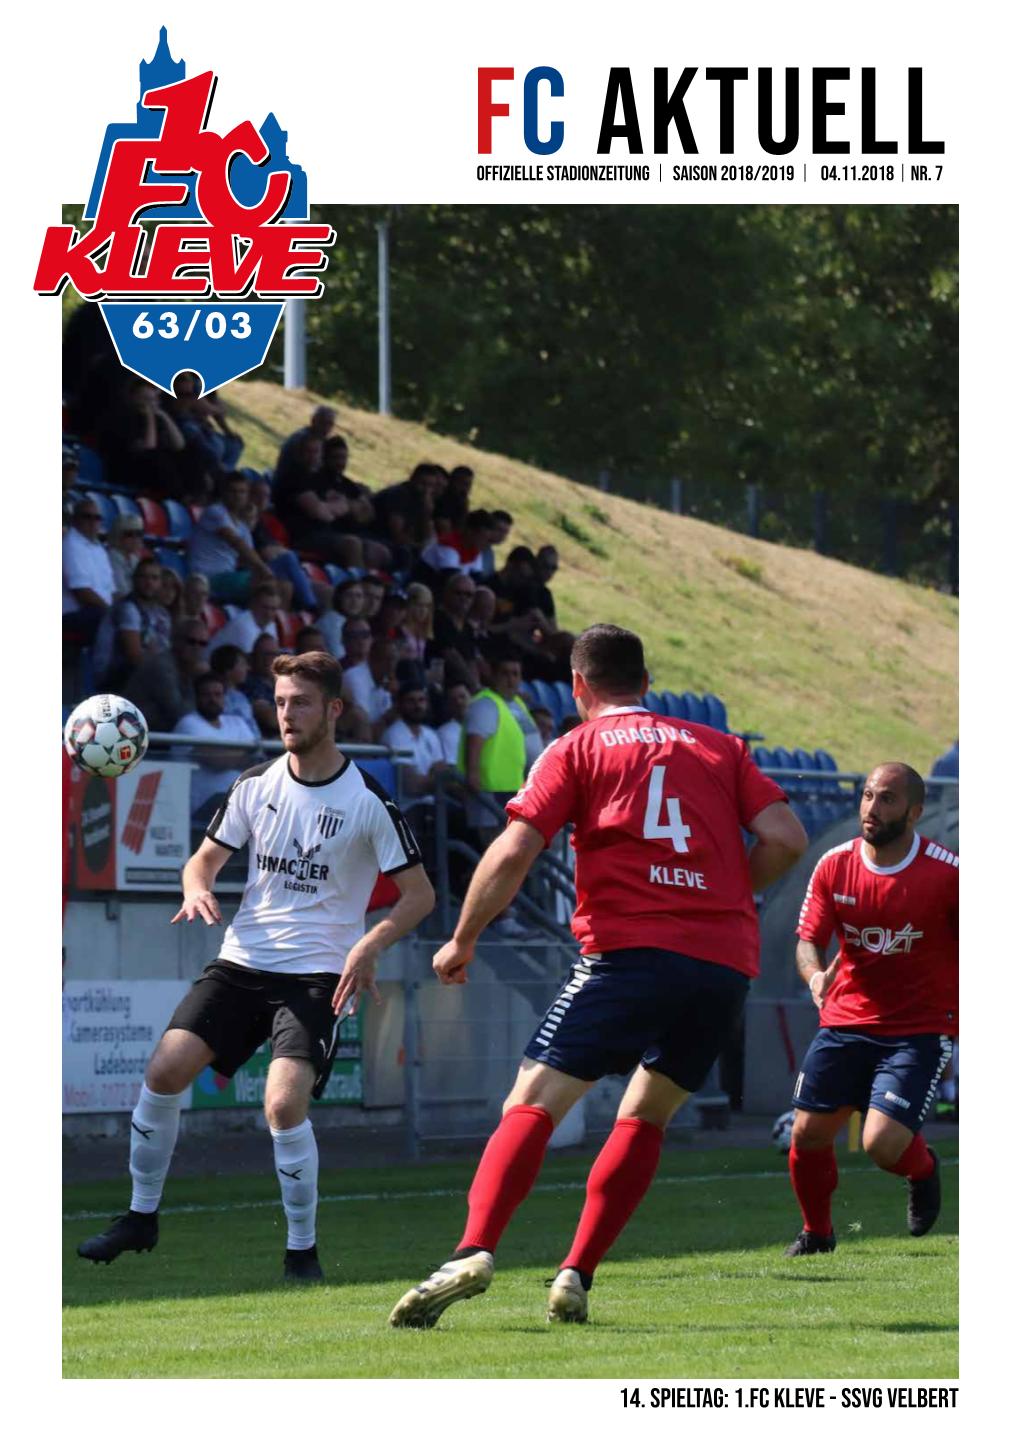 14. Spieltag: 1.FC Kleve - SSVG VELBERT the BALL IS BACK